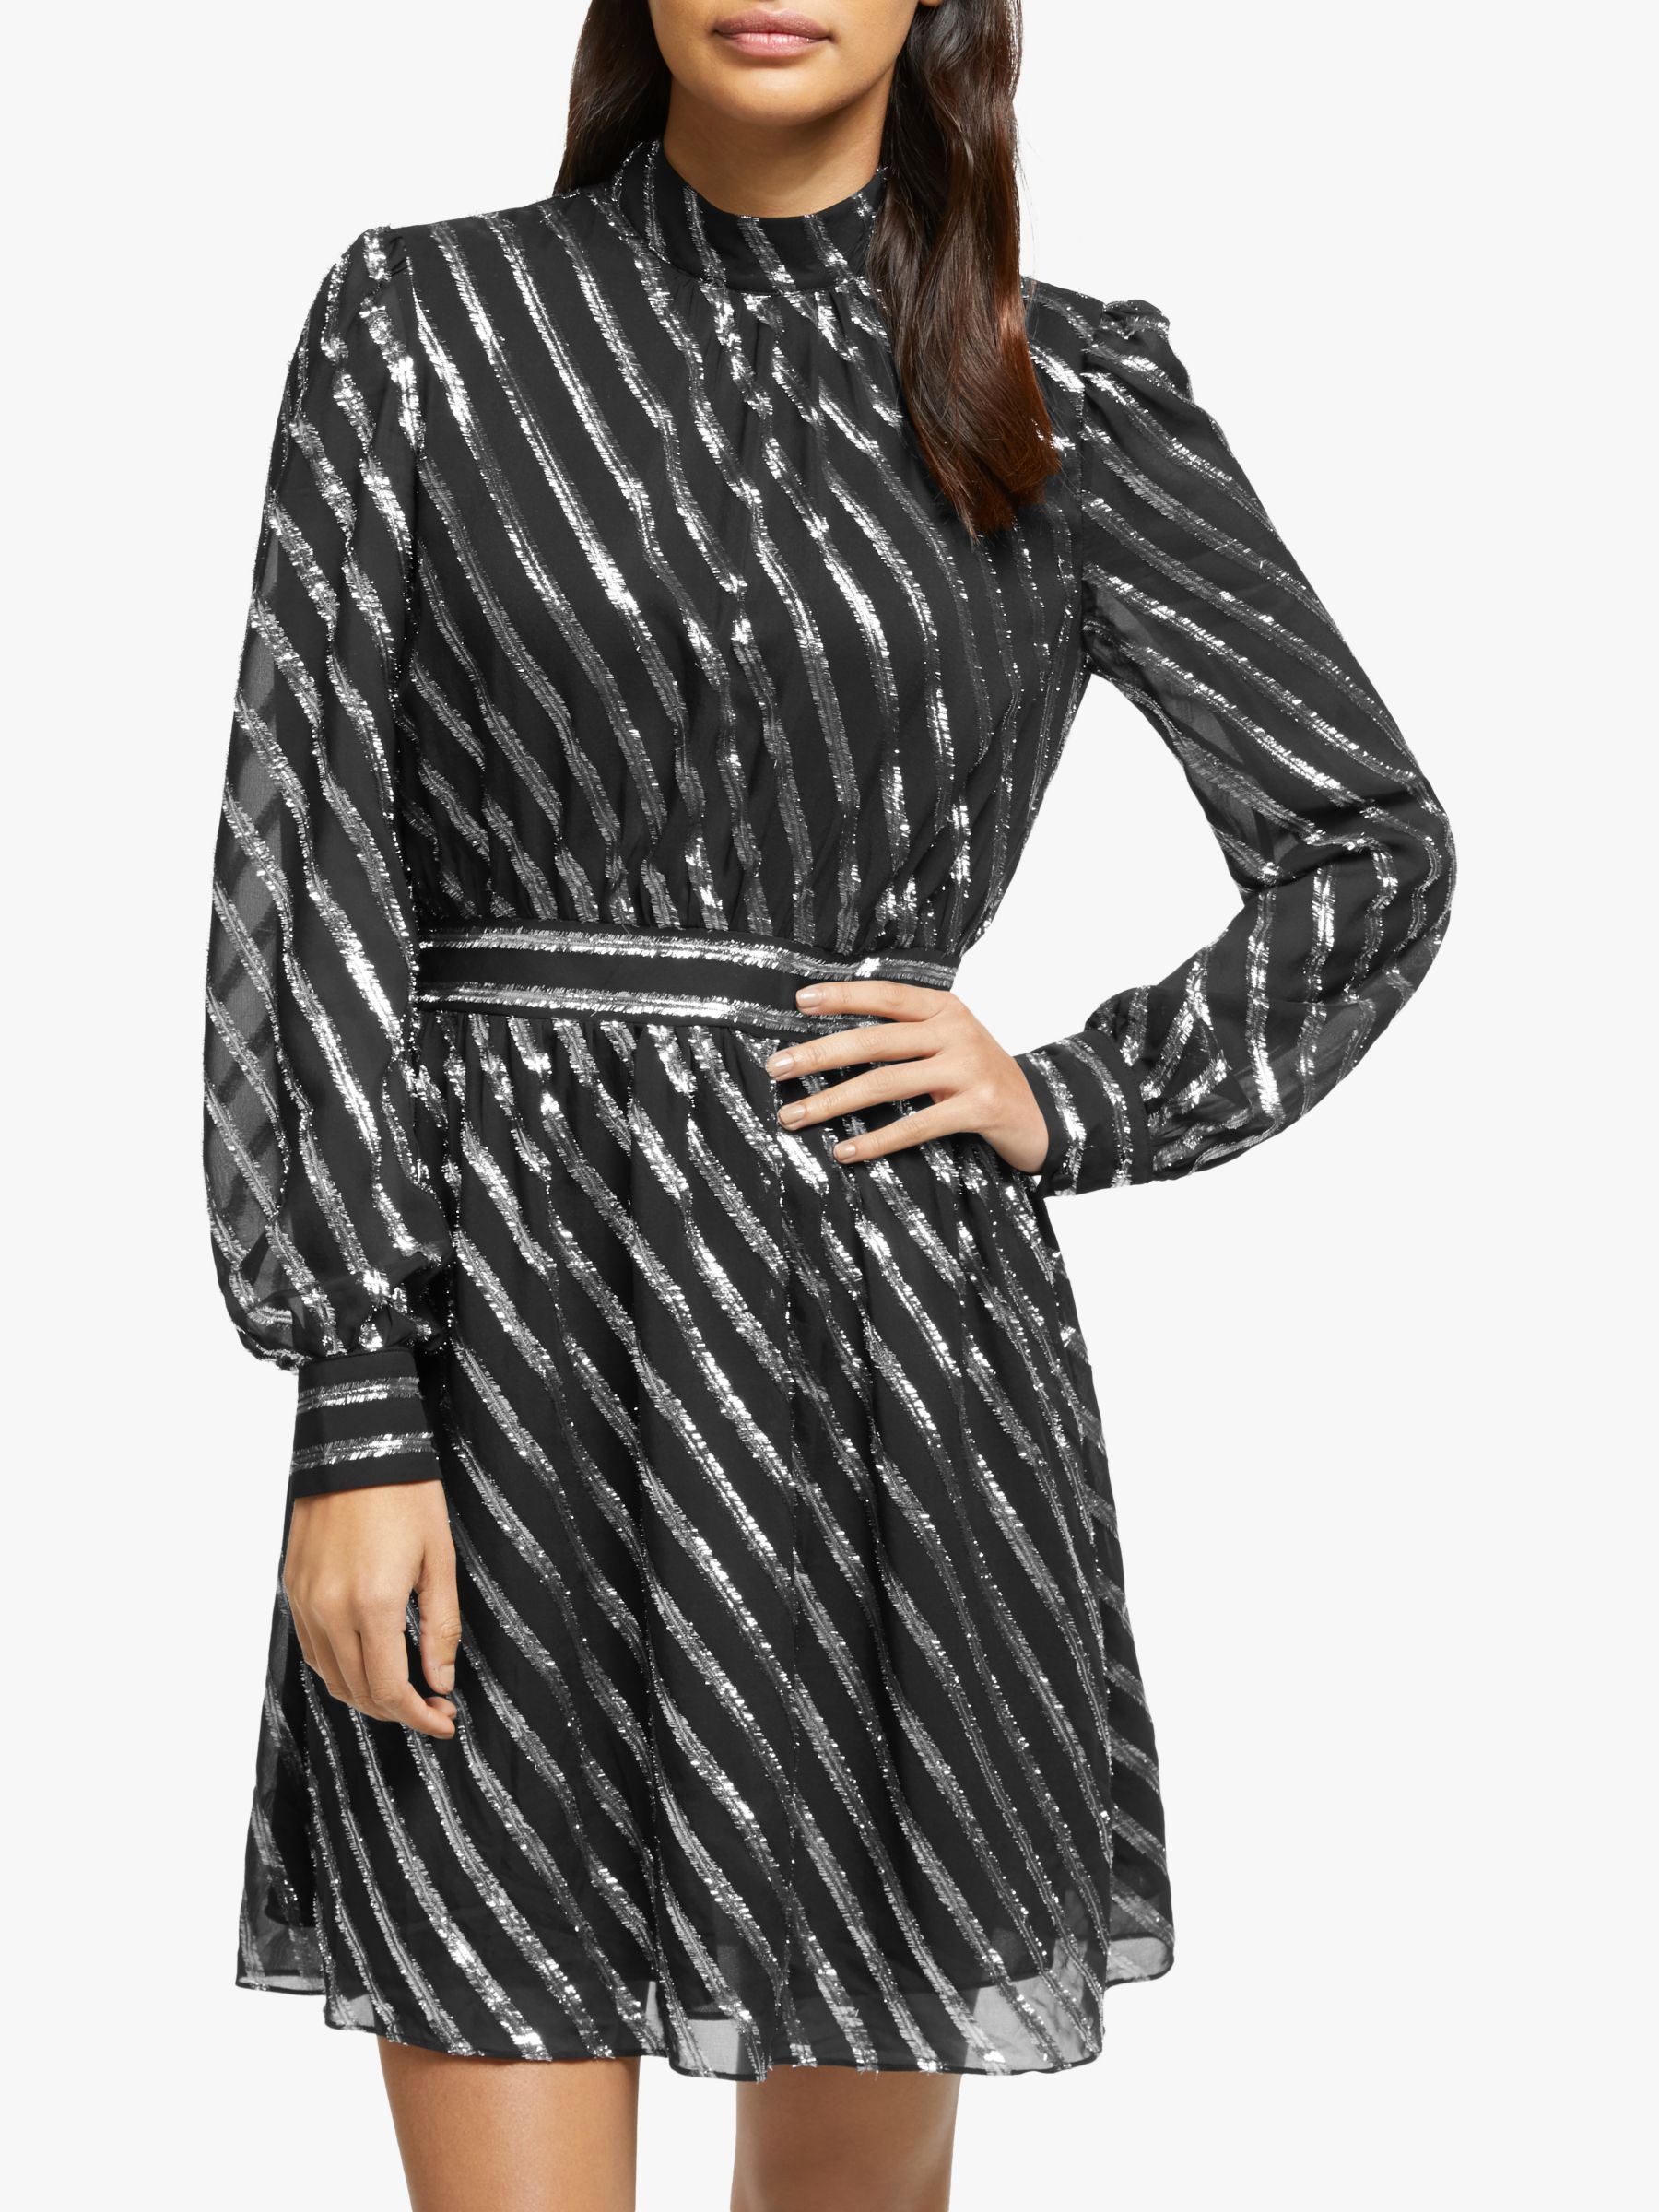 Michael Kors Sequin Dress - The Stripe.